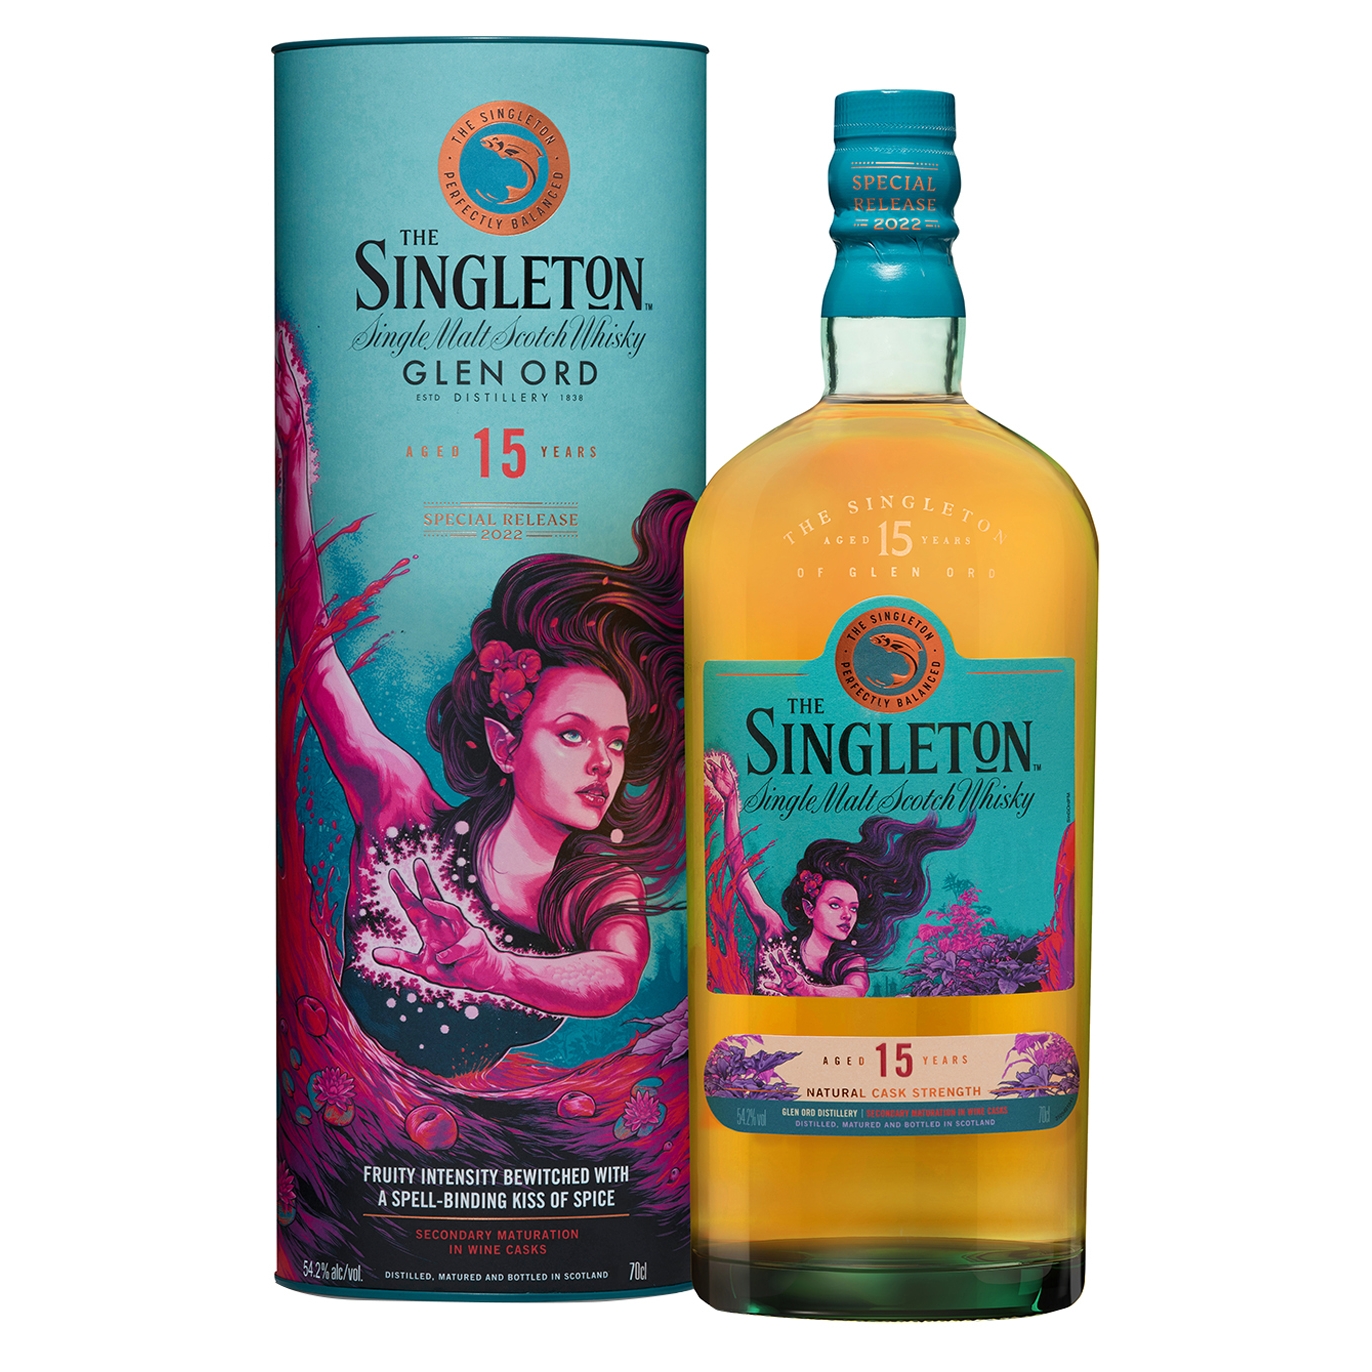 The Singleton The Singleton Of Glen Ord 15 Year Old Single Malt Scotch Whisky Special Release 2022